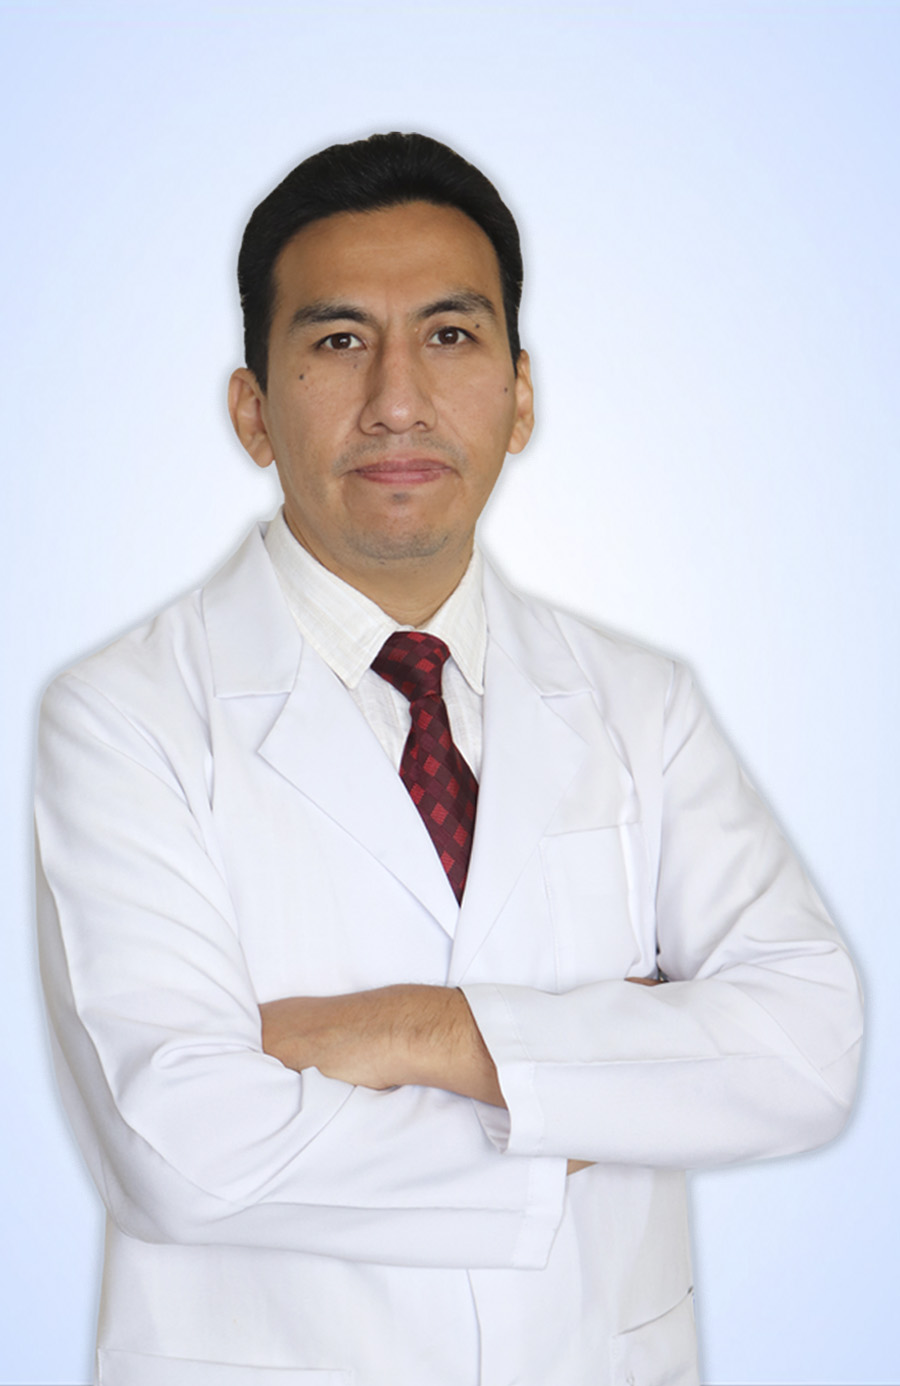 DR. CHIRINOS